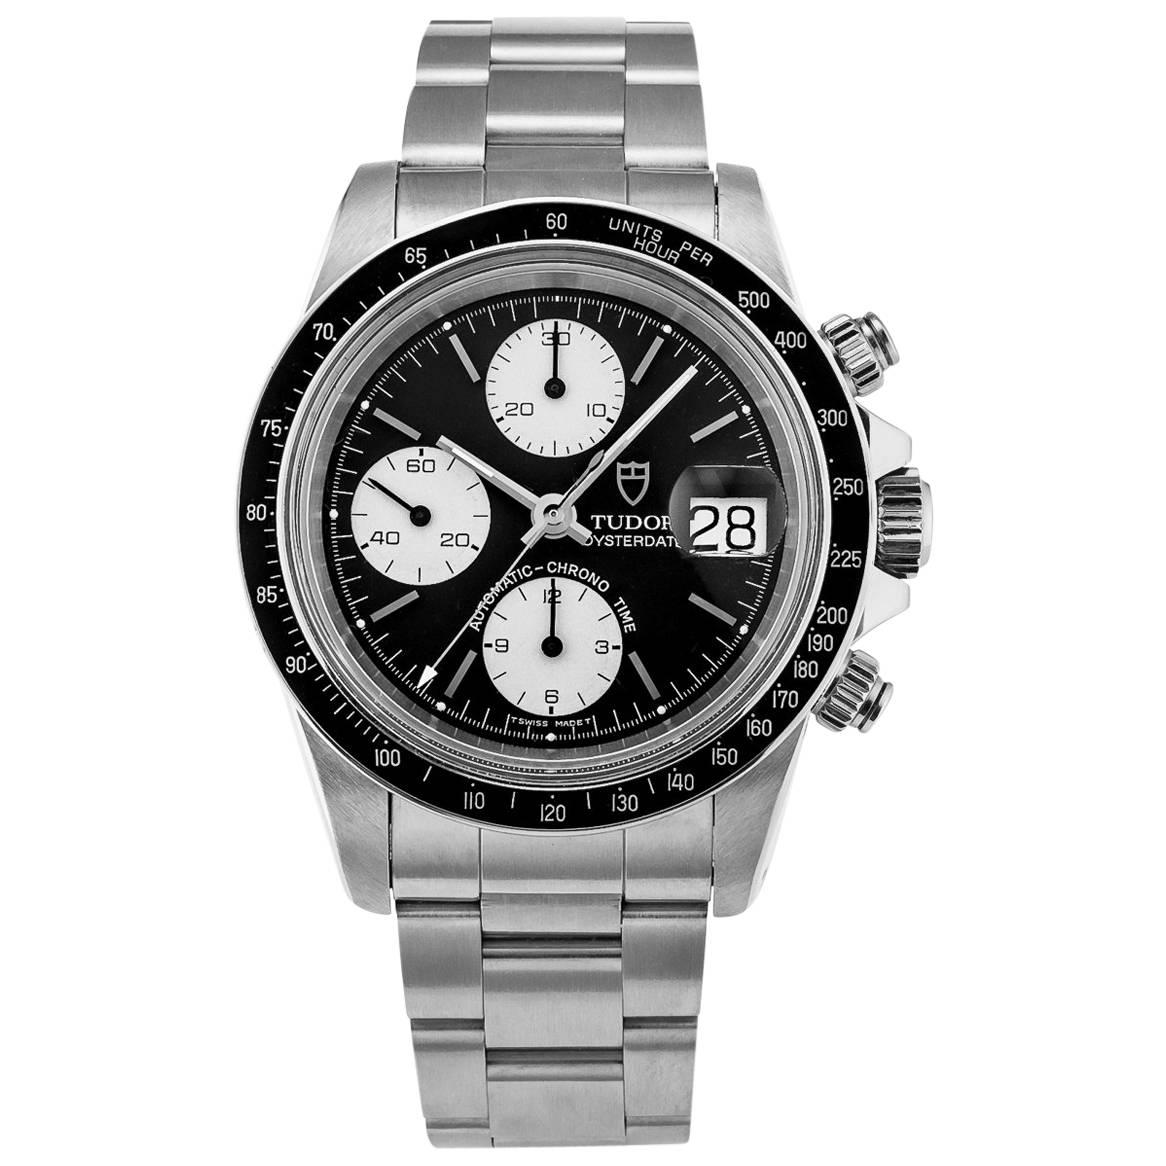 Rolex Tudor Stainless Steel Oysterdate Big Block Chronograph Wristwatch